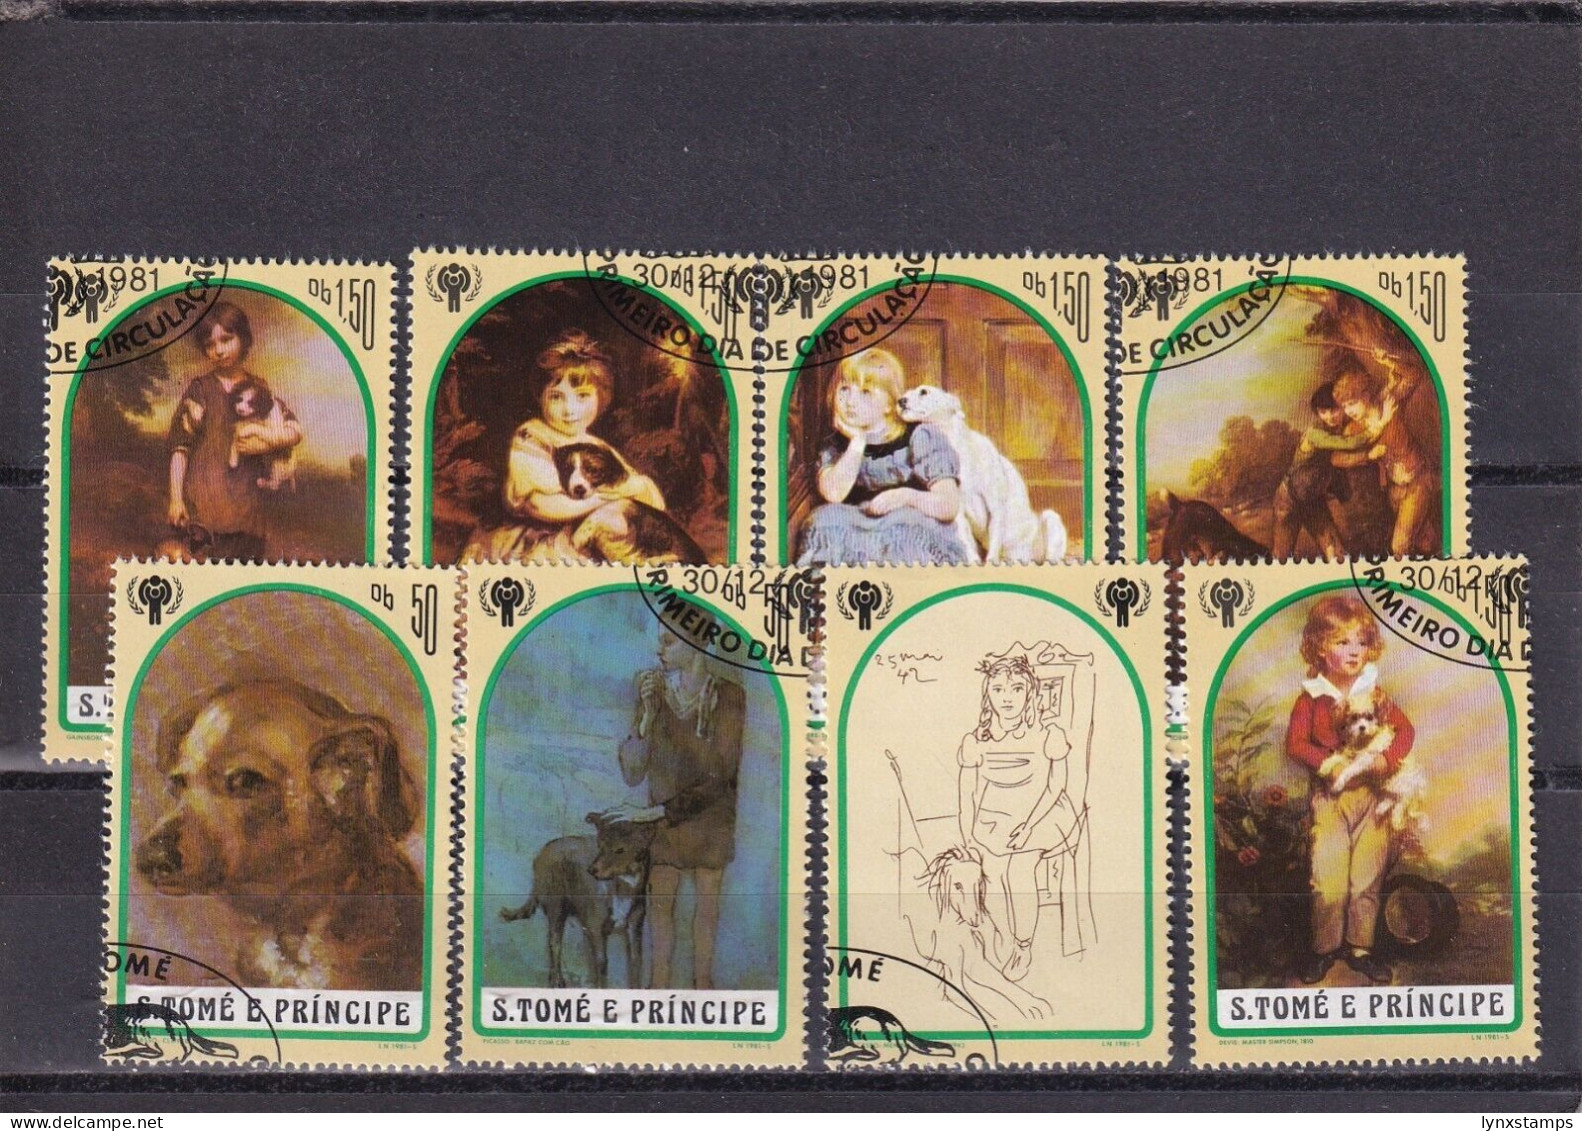 SA03 Sao Tome And Principe 1981 International Year Of The Child Used Stamps - São Tomé Und Príncipe